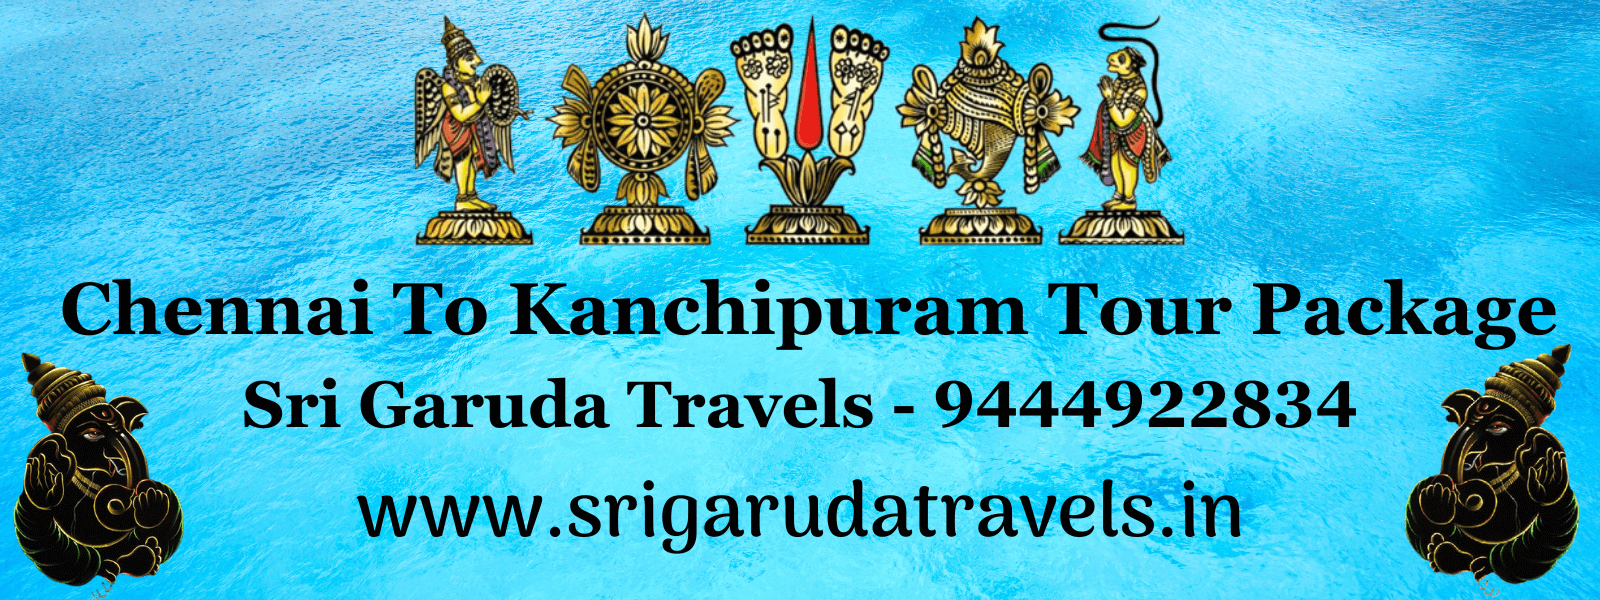 Chennai To Kanchipuram Tour Package